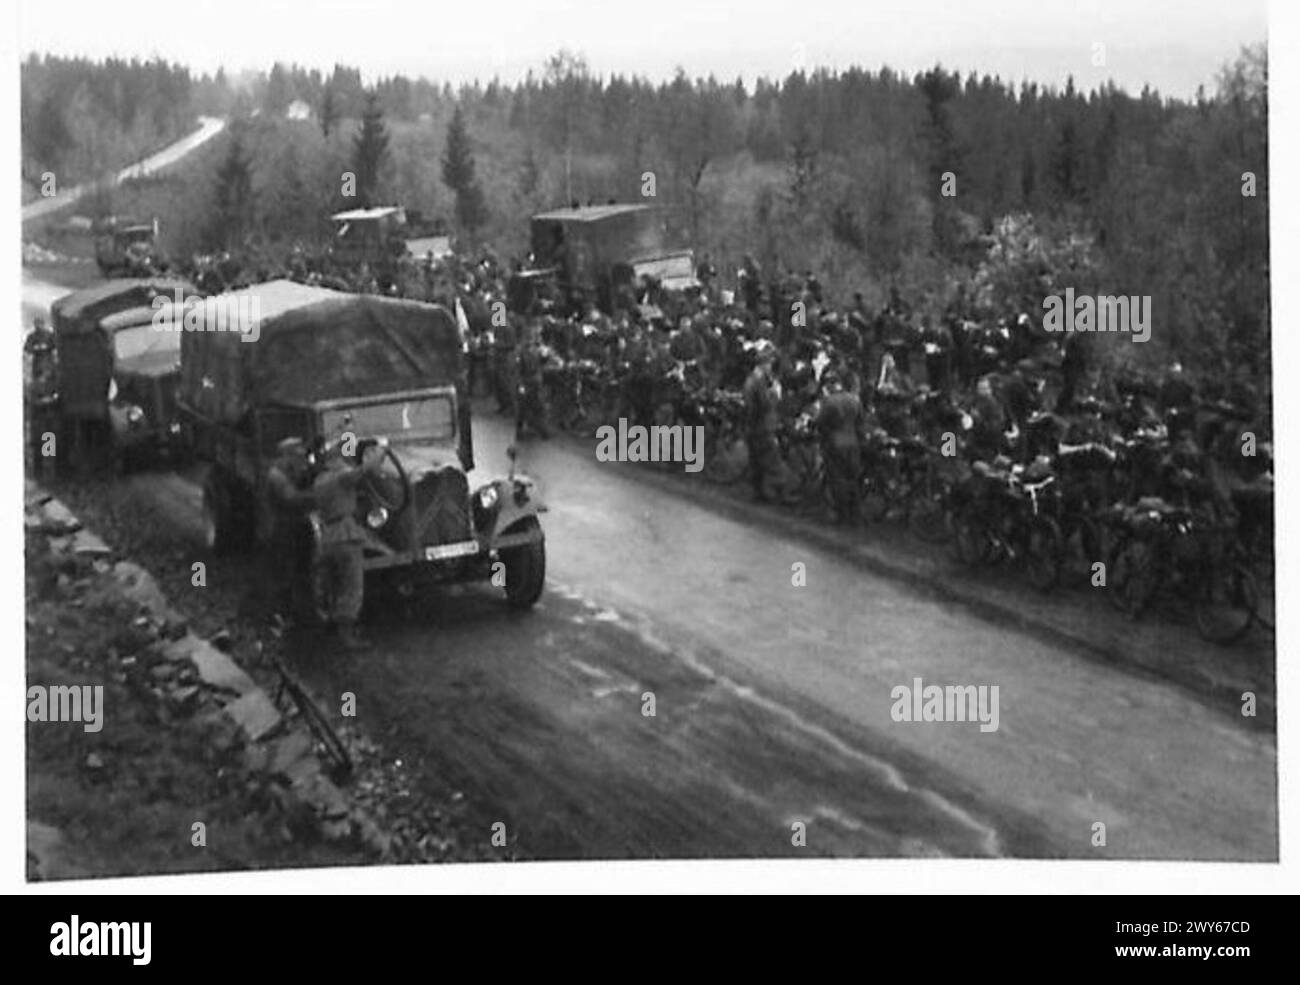 SZENEN IN NORWEGEN - deutsche Bergtruppen verlassen Oslo, halten am Straßenrand für Essen. Britische Armee, 21. Armeegruppe Stockfoto